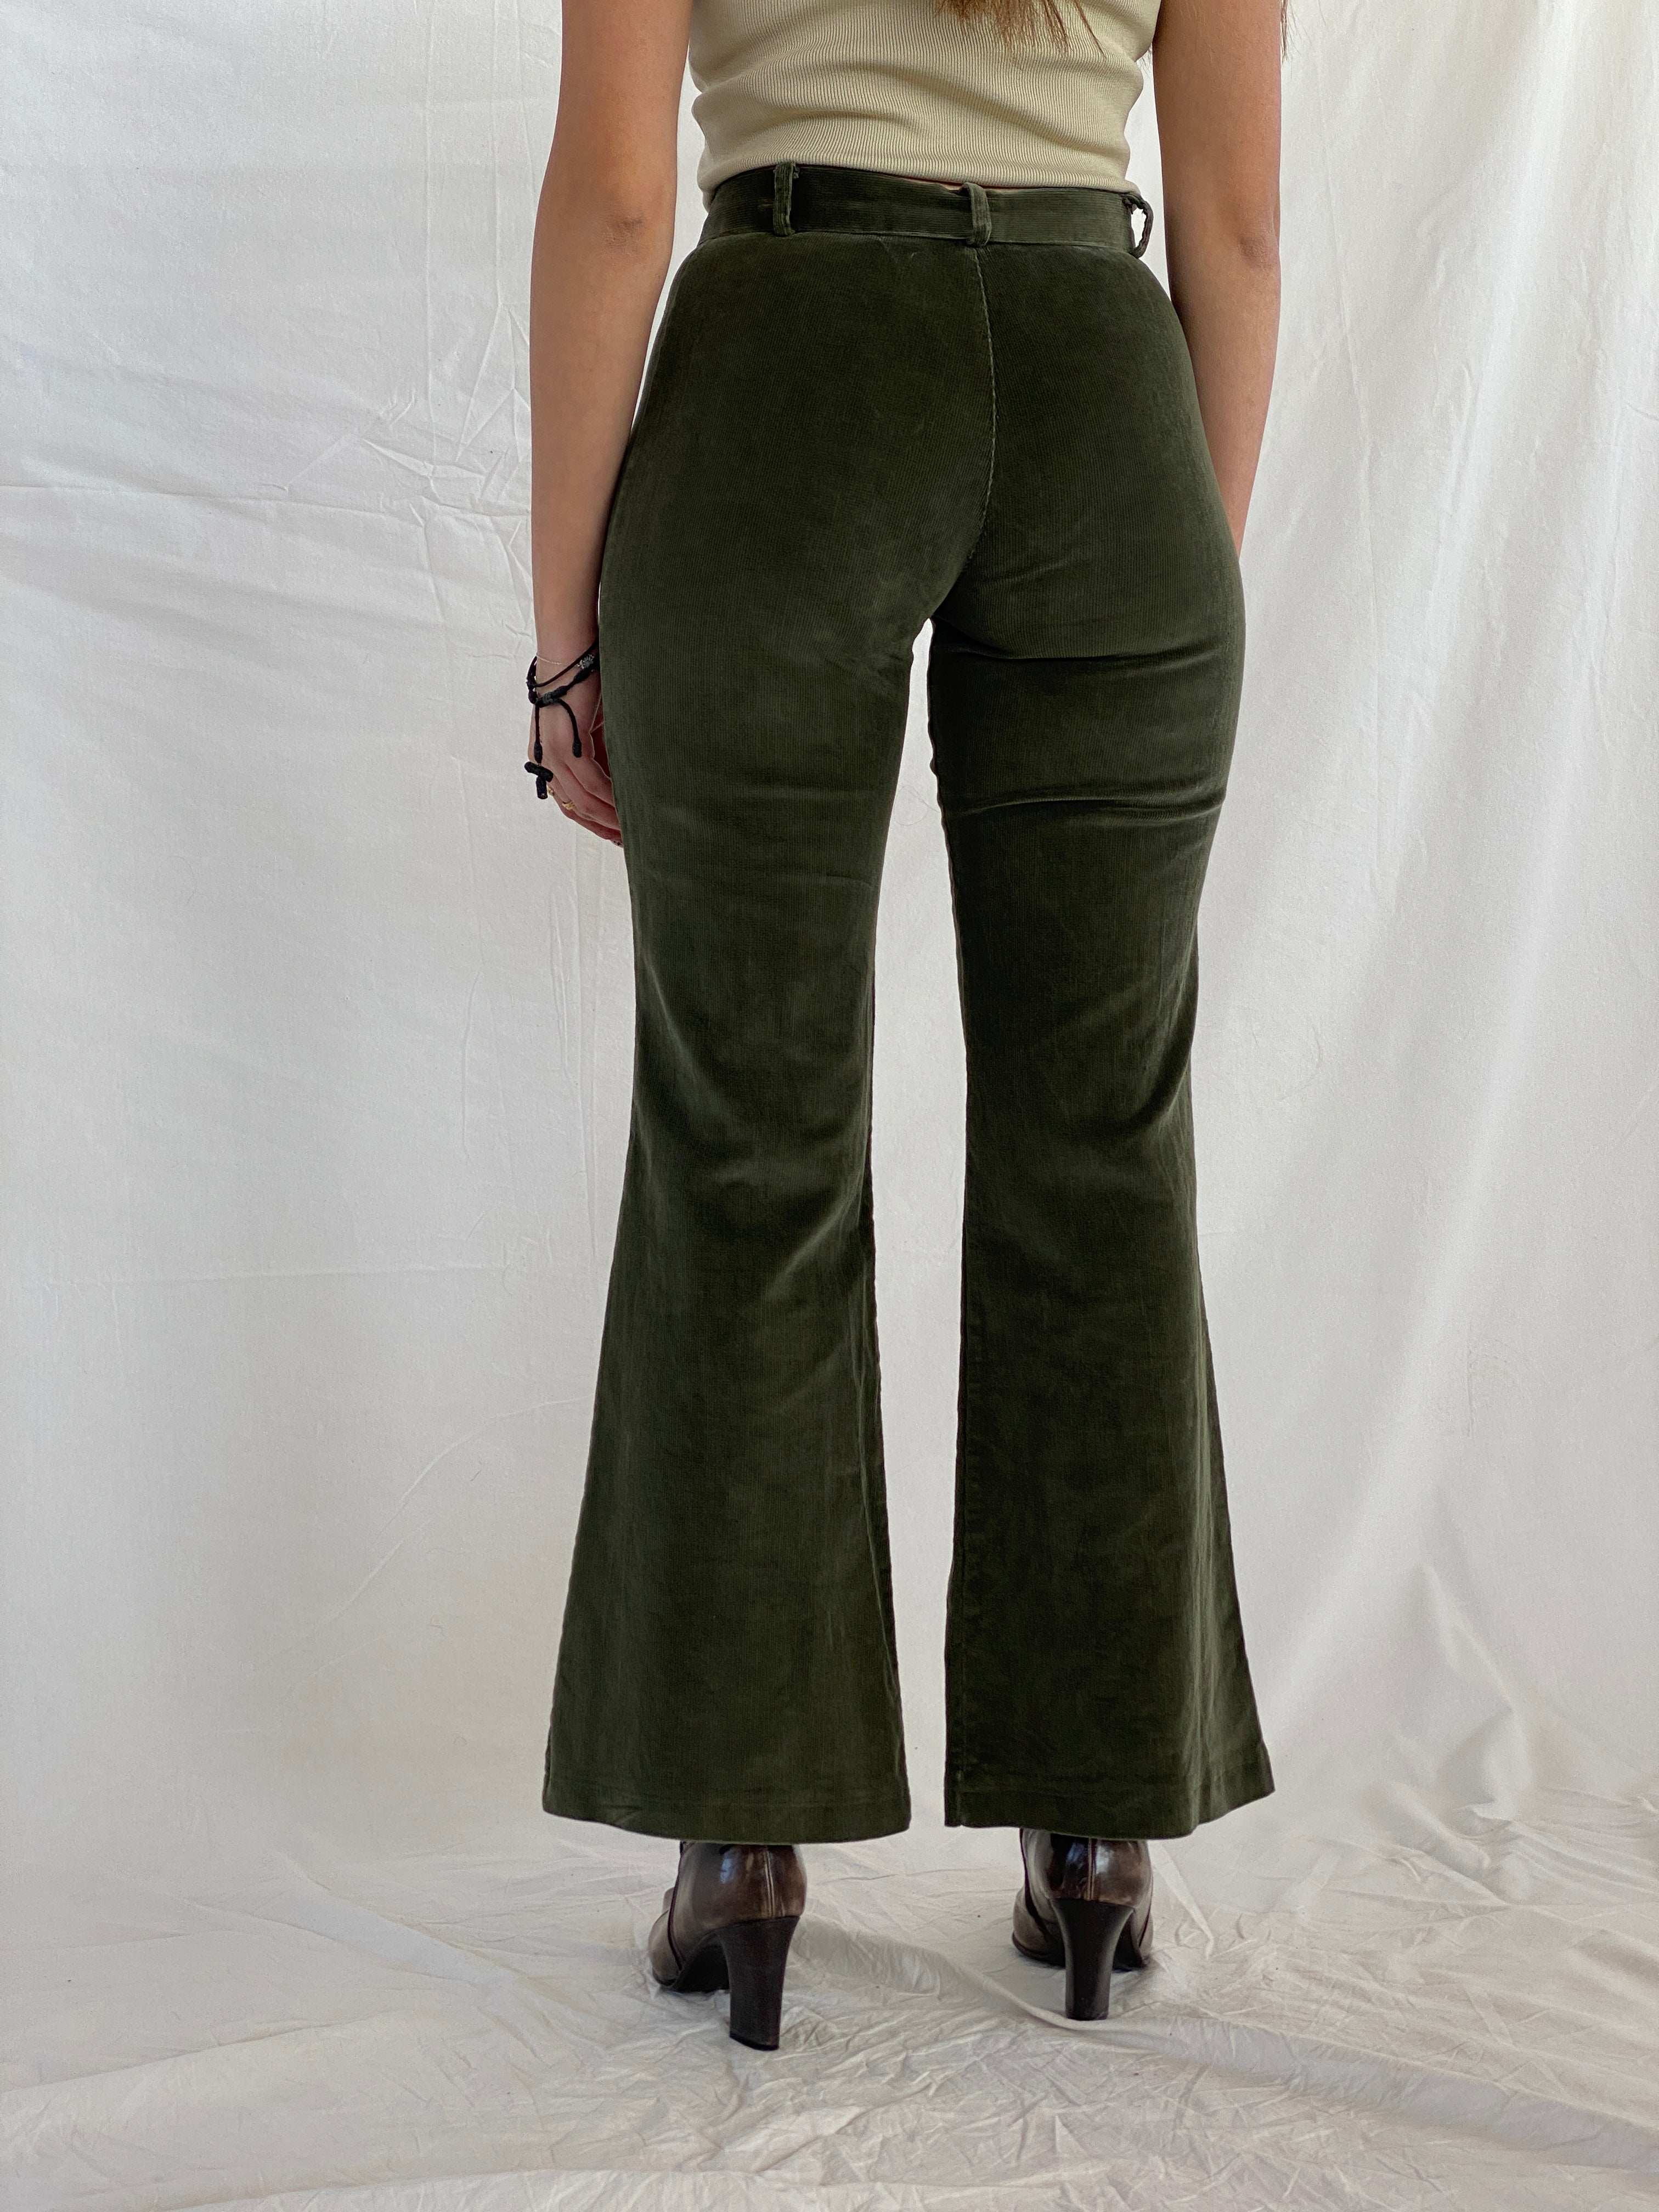 Vintage Y2K RPT Collection Corduroy Pants - Balagan Vintage Corduroy Pants 00s,90s,corduroy pants,Juana,NEW IN